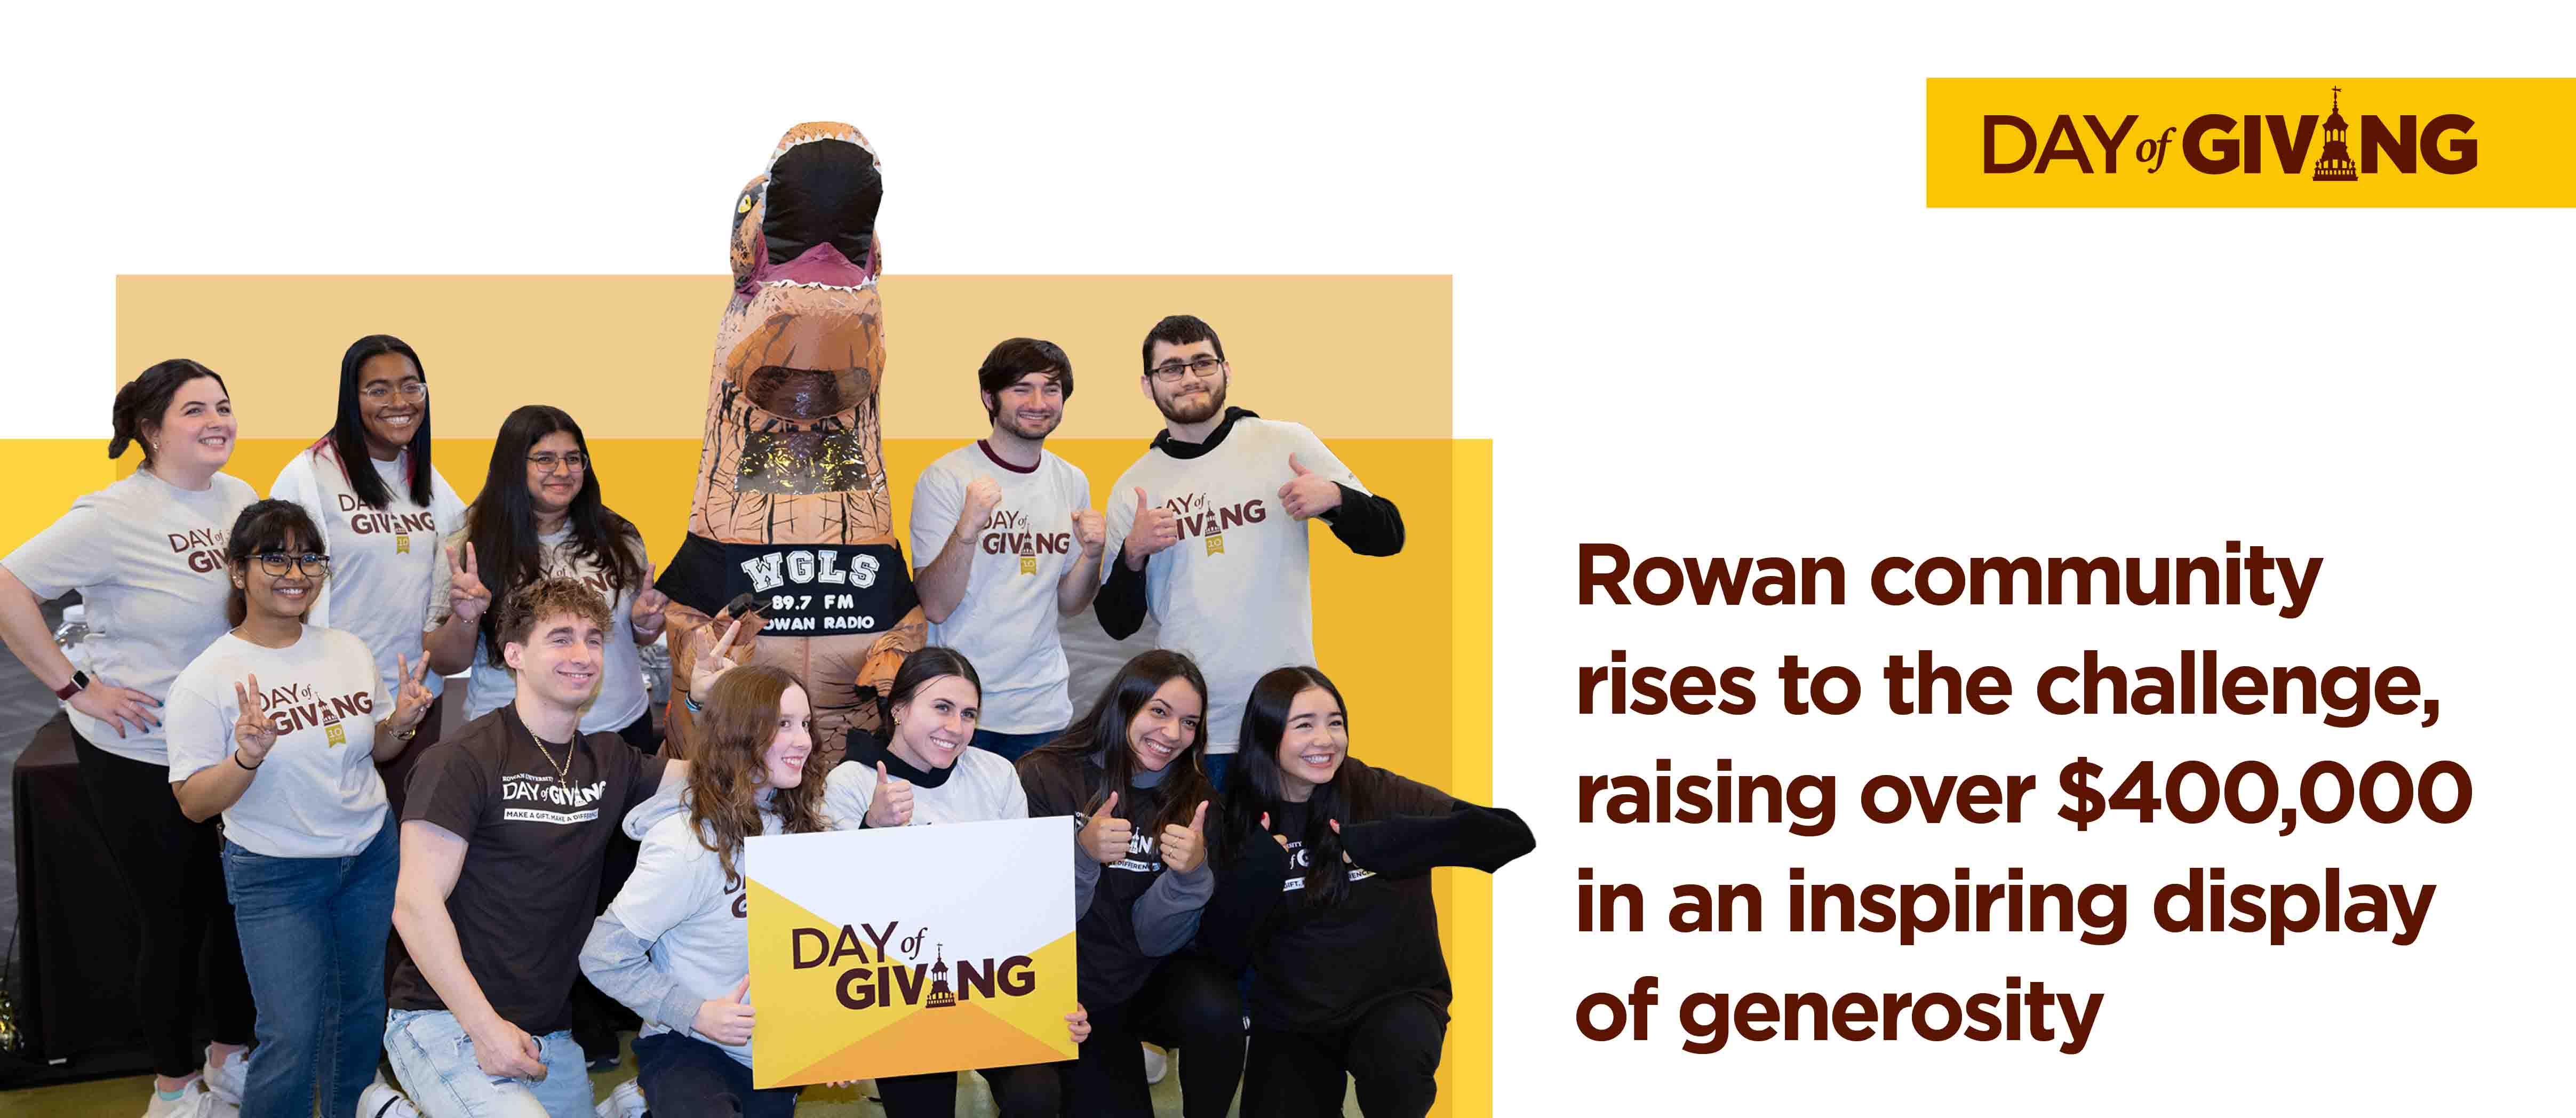 Rowan community rises to the challenge, raising over $400,000 in an inspiring display of generosity